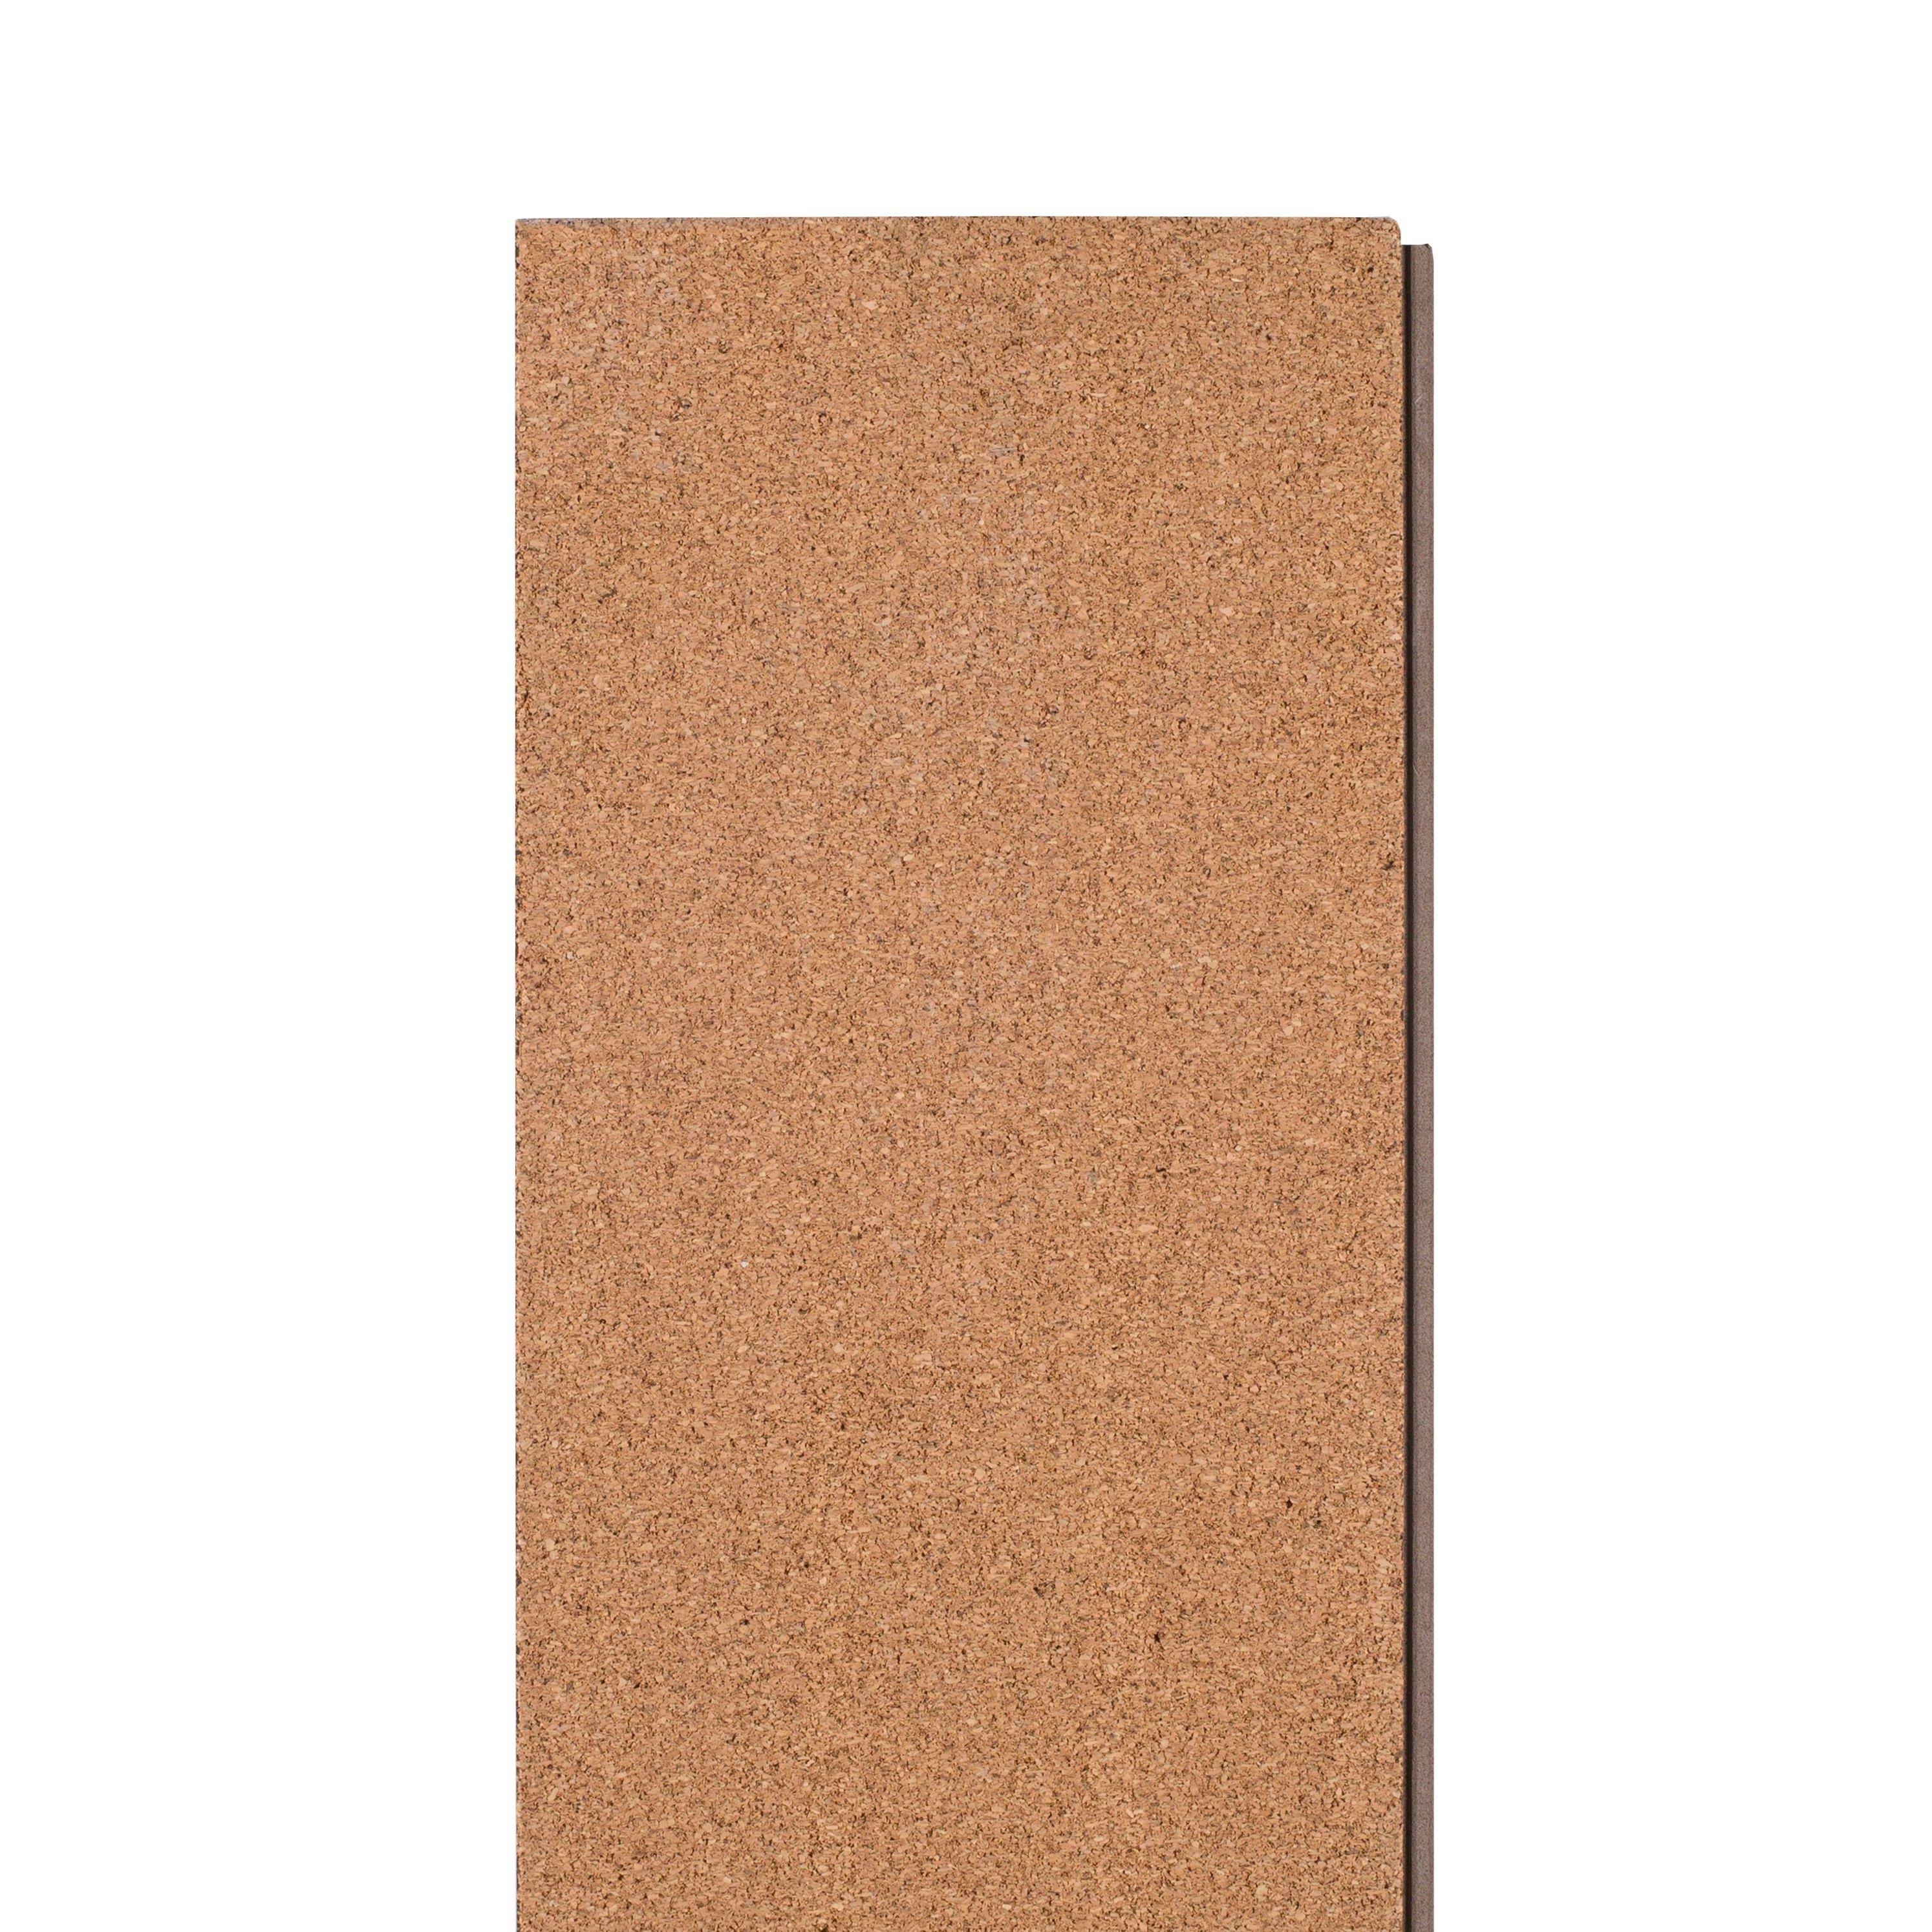 Cheyenne Rigid Core Luxury Vinyl Plank - Cork Back